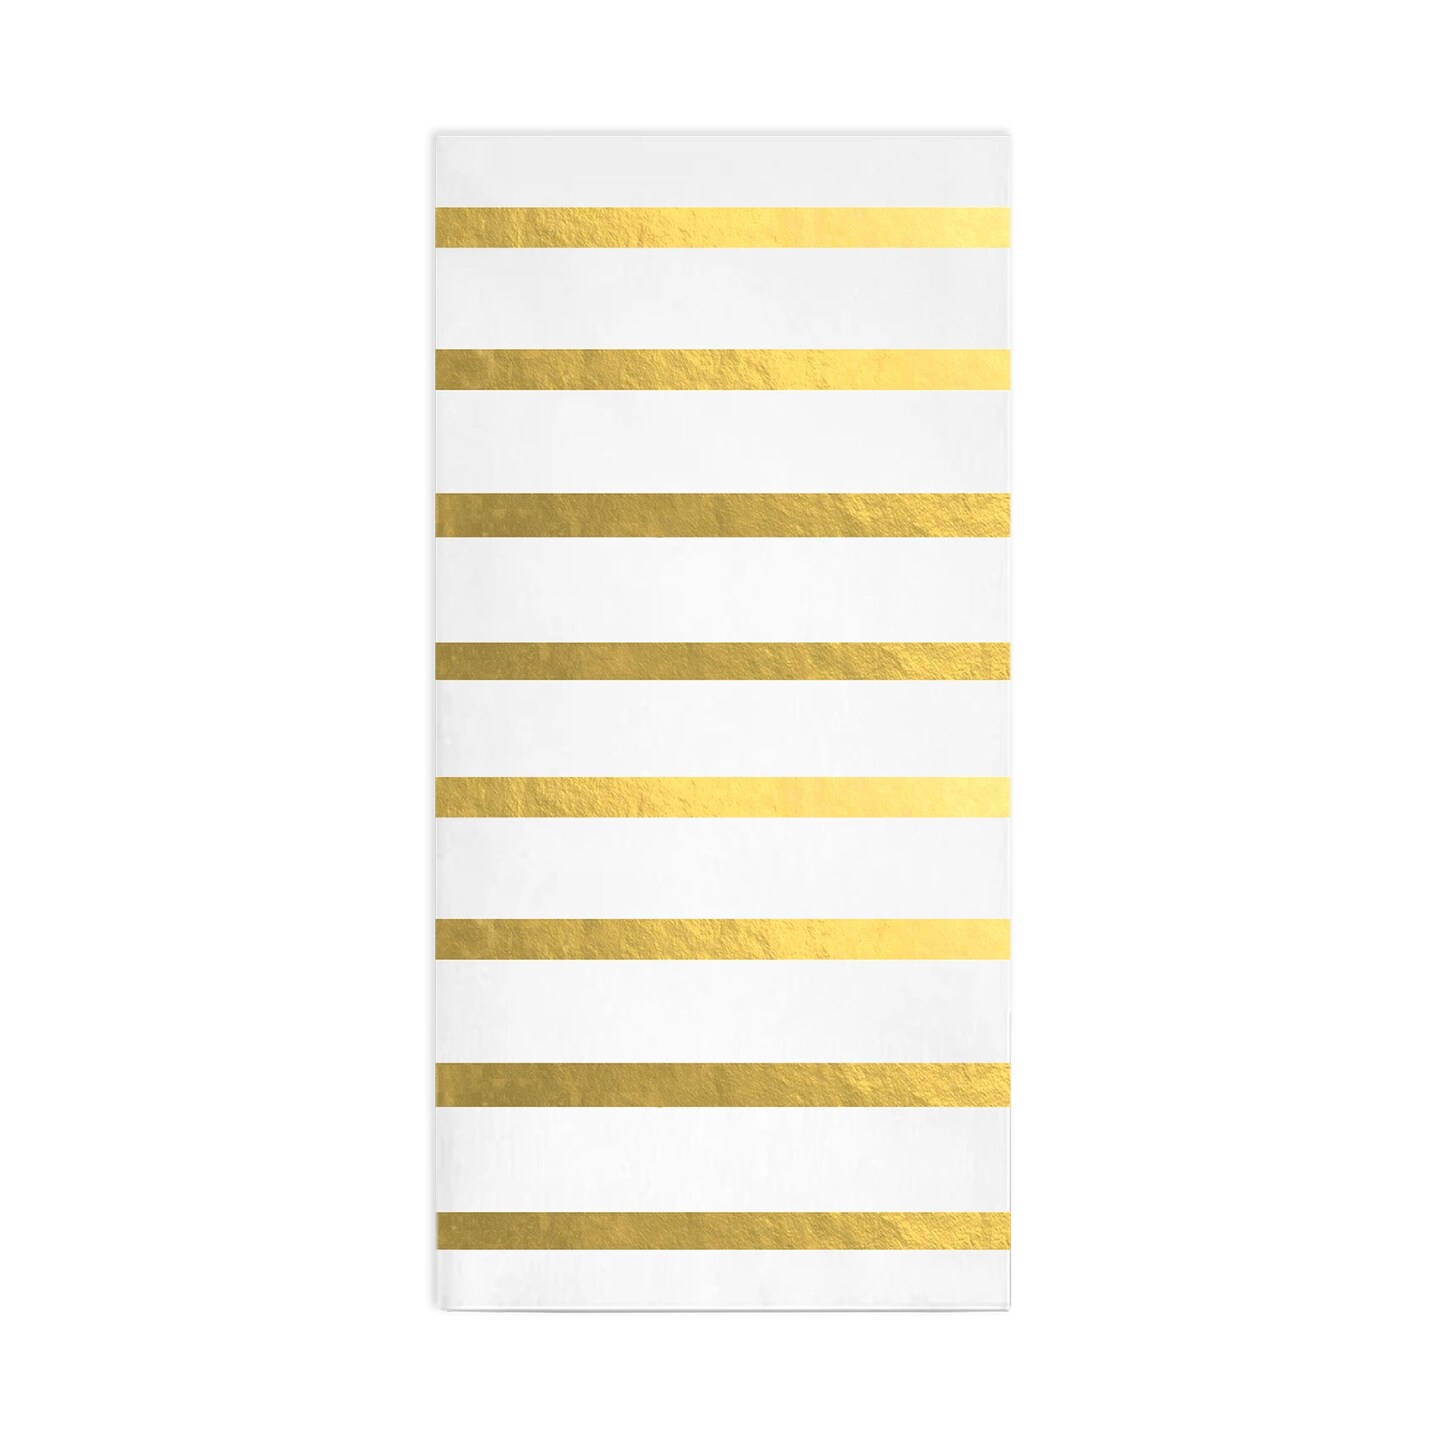 White with Gold Stripes Paper Dinner Napkins (600 Napkins)